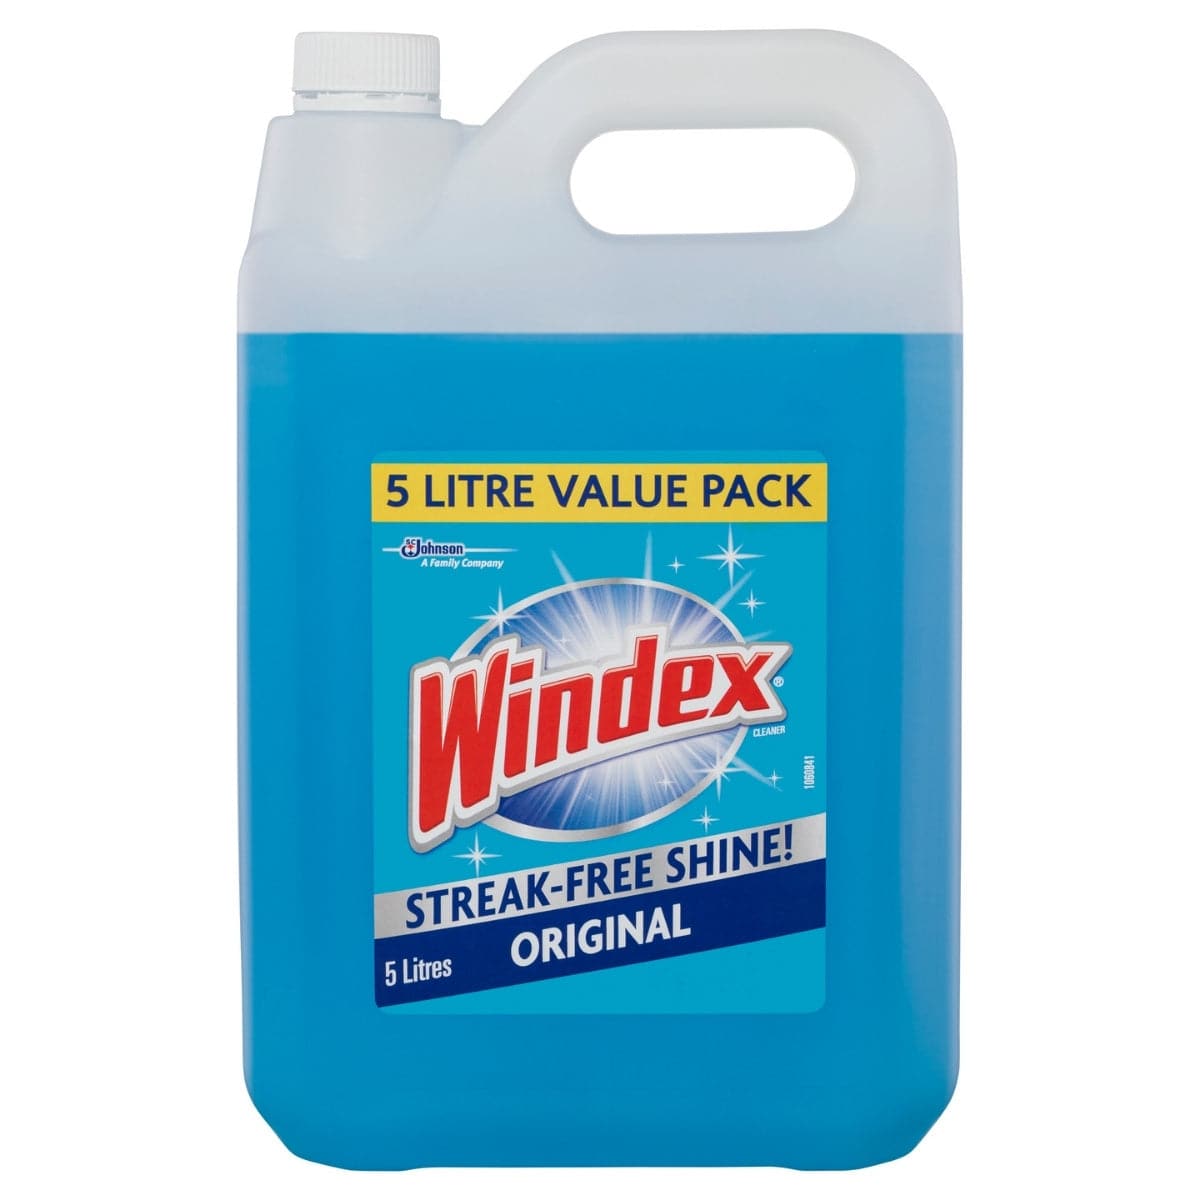 Windex Glass Cleaner Liquid 5L (Pack of 2)